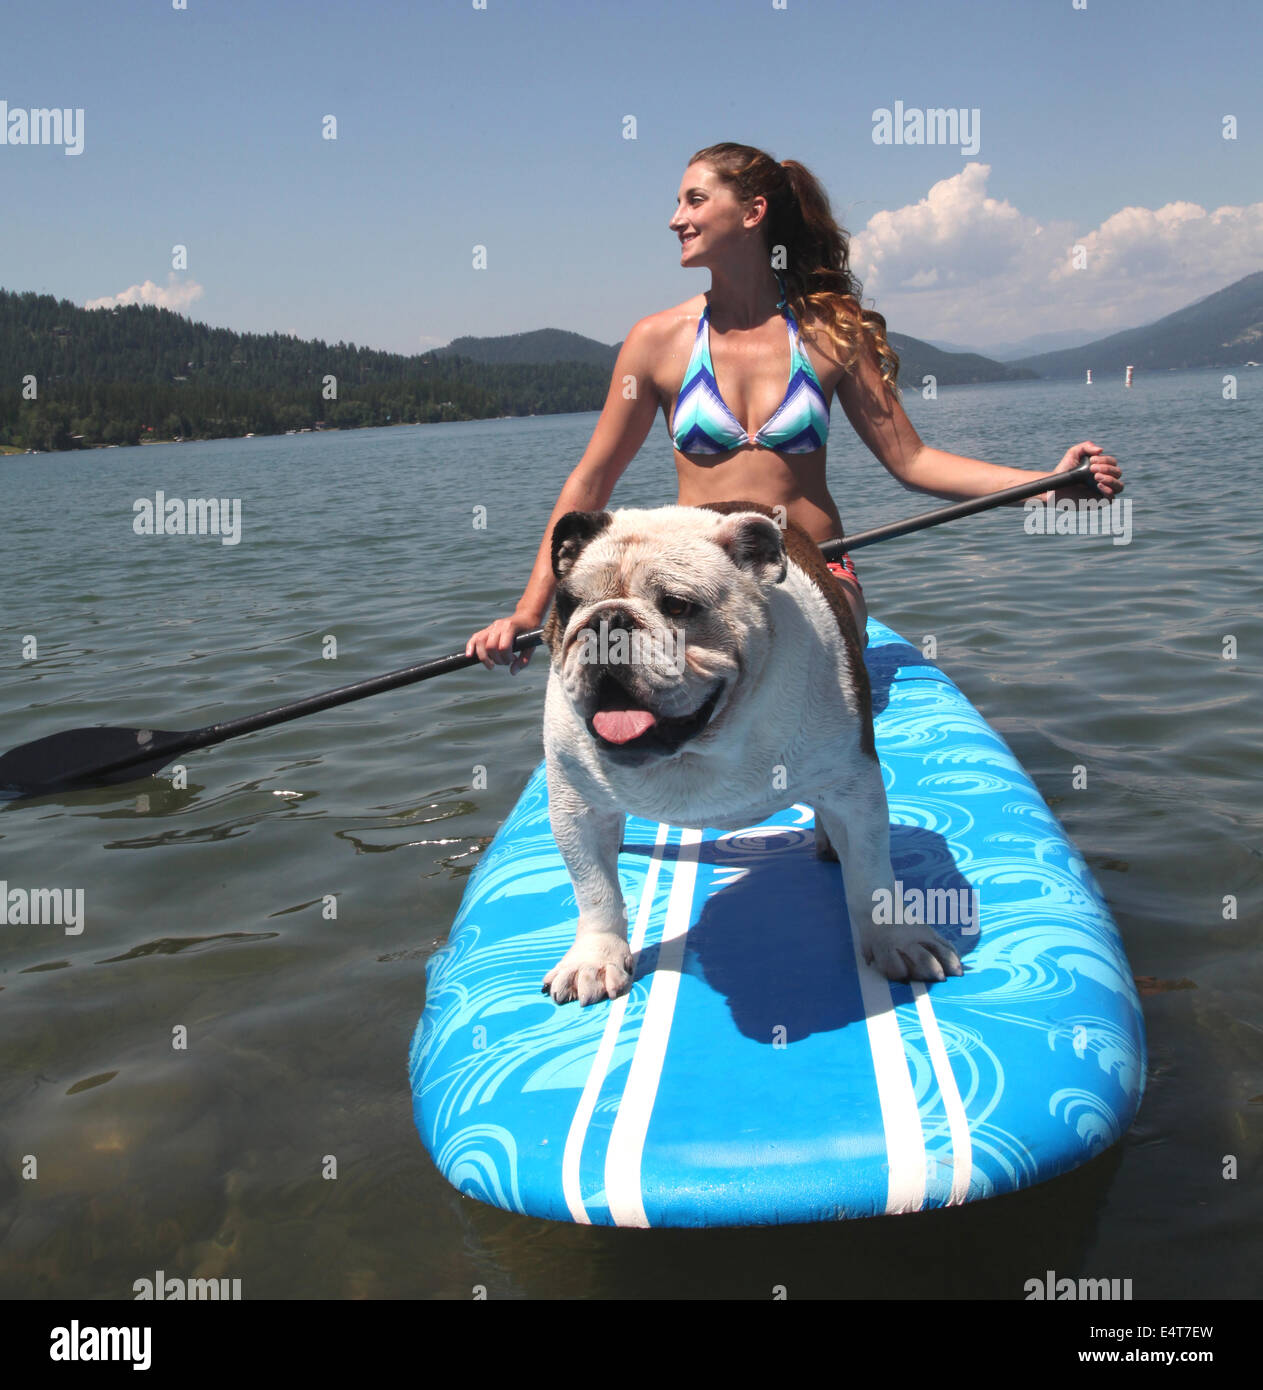 Bulldog riding on paddle board on lake. Stock Photo